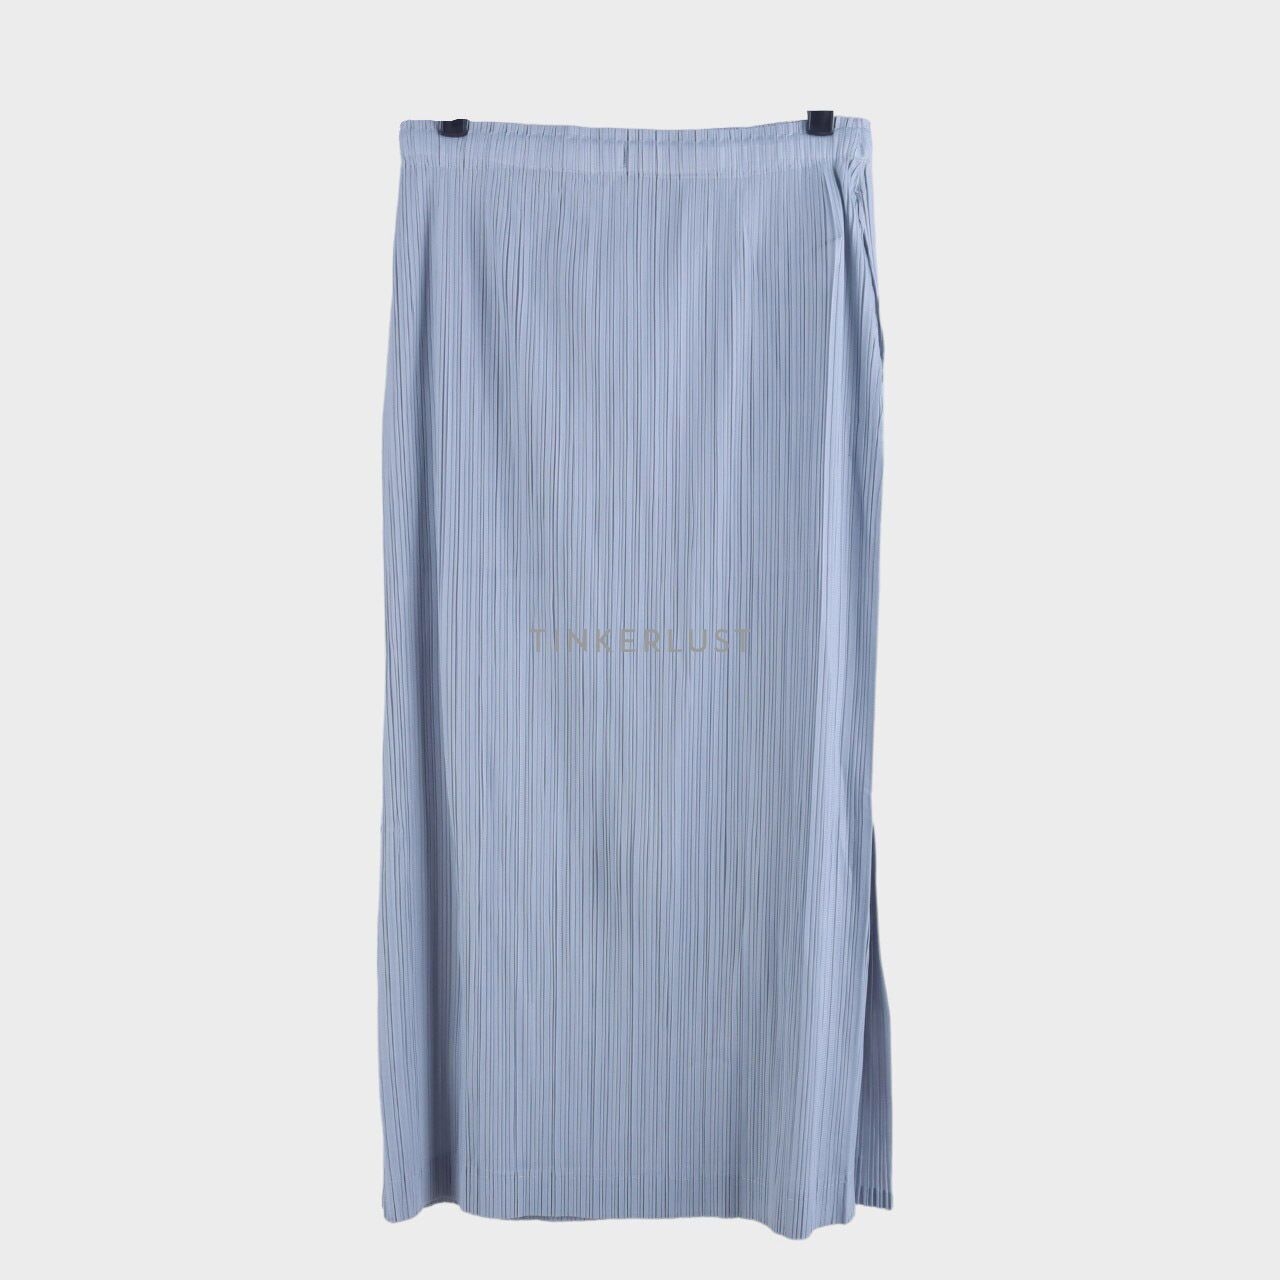 Orgeo Official Blue Pleated Midi Skirt